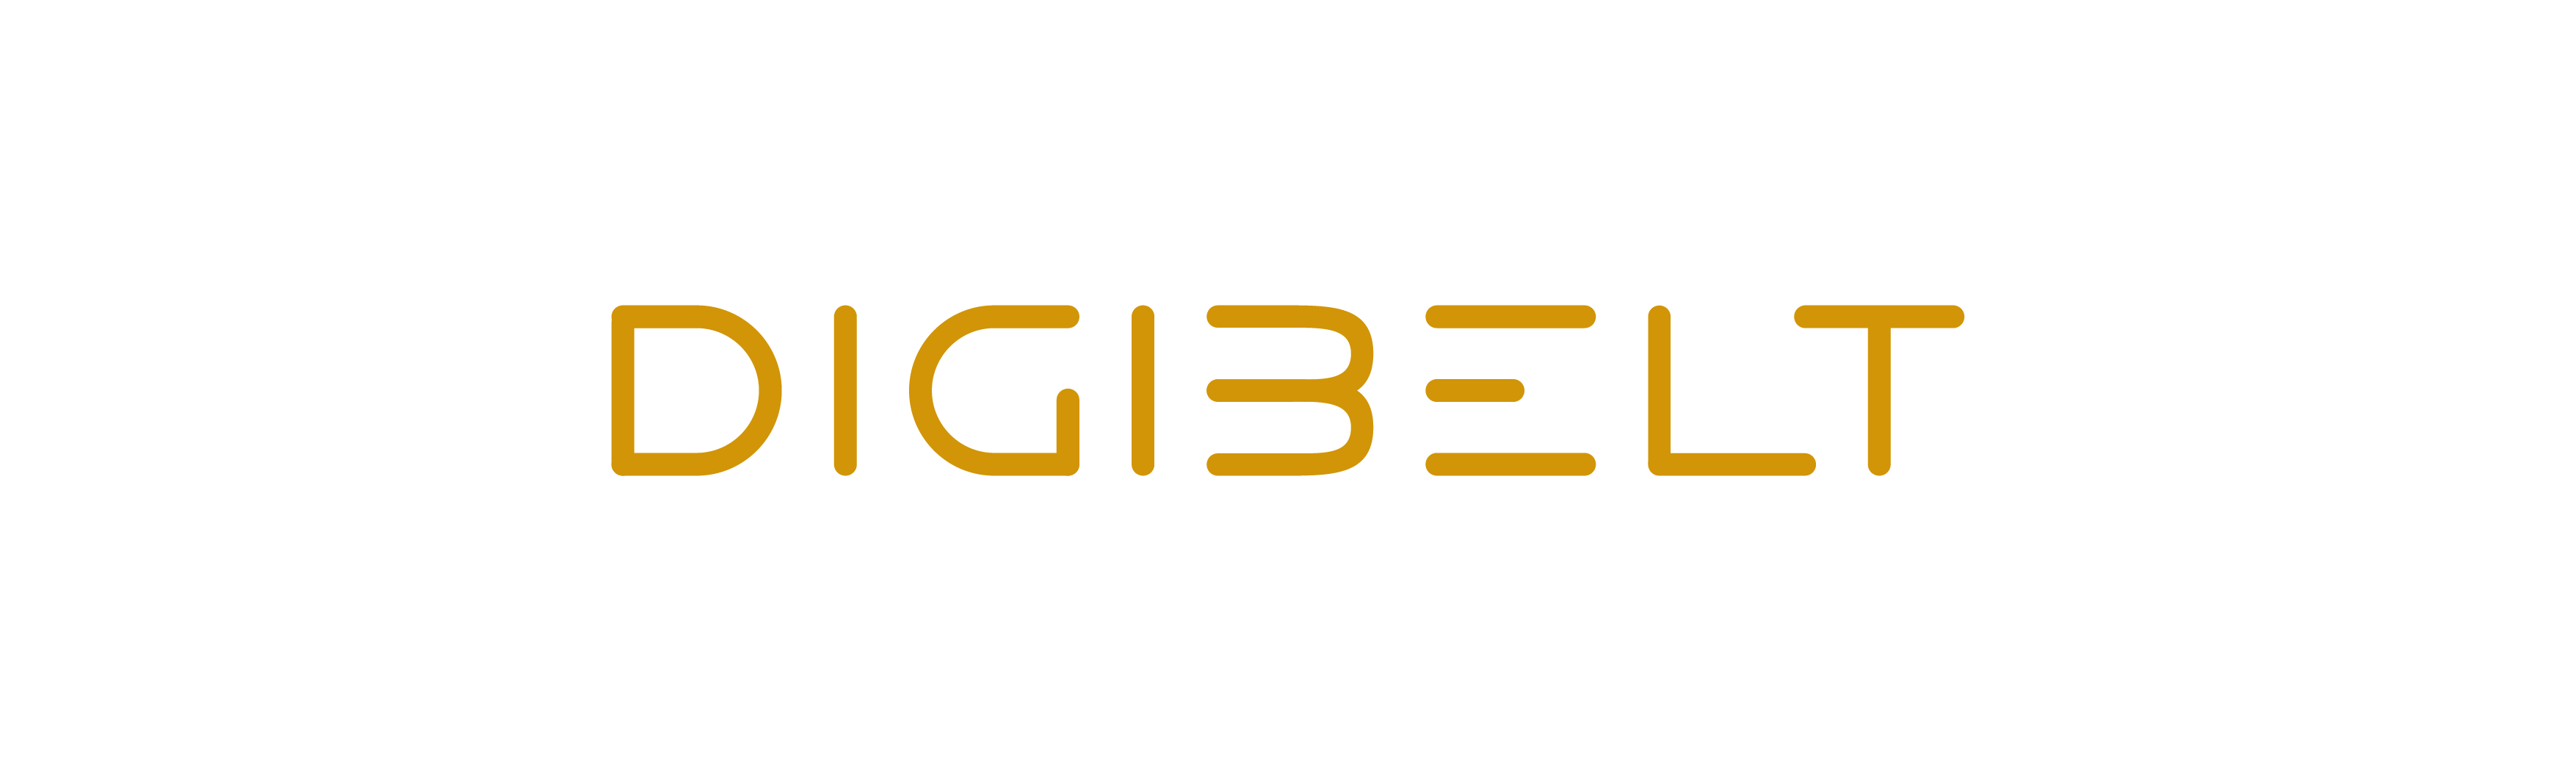 digibelt_logo_NEW_official-06